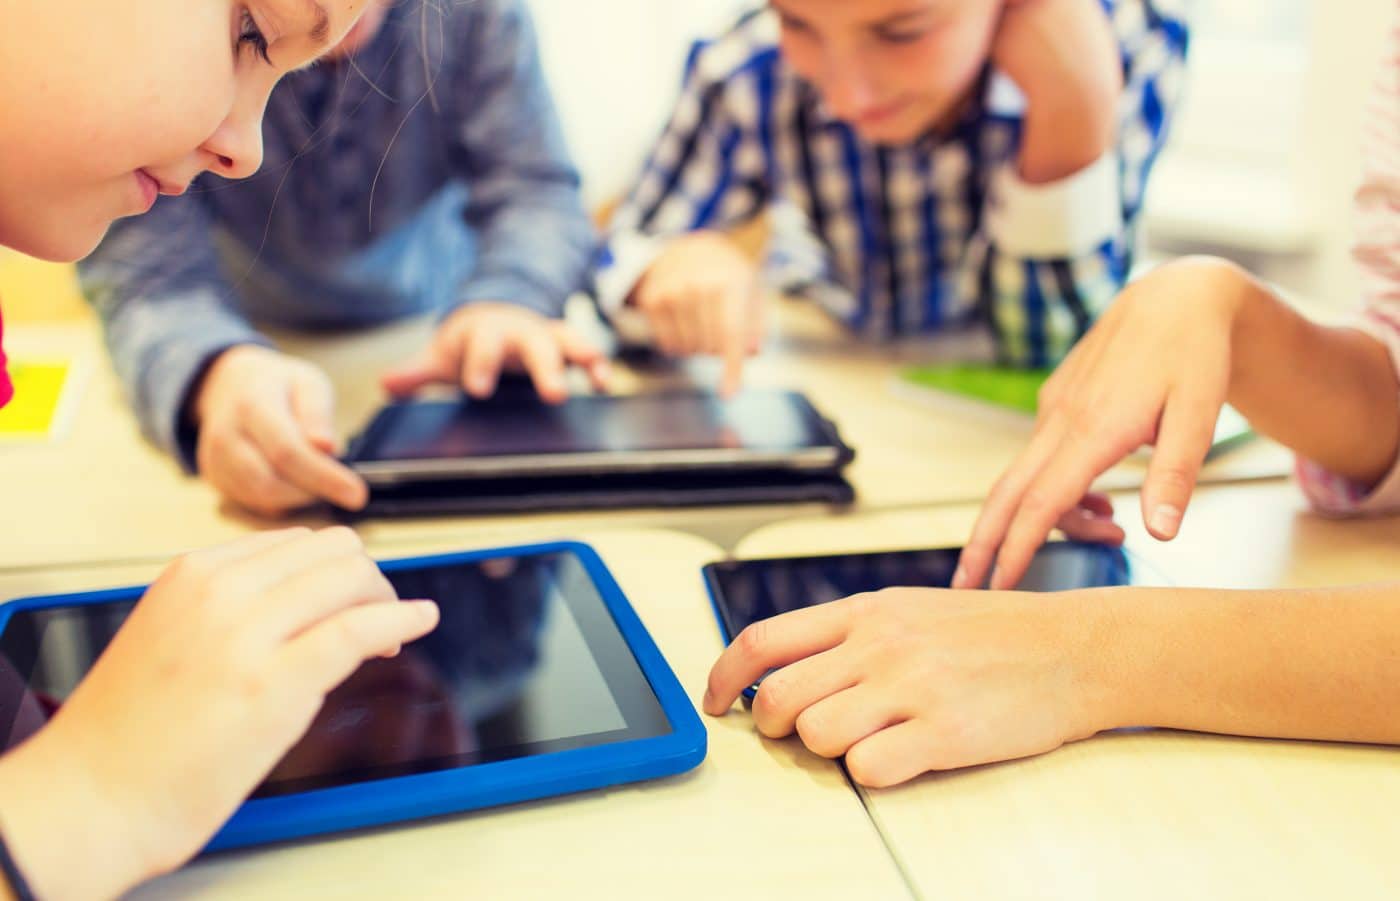 Tech to improve children's skills, modern gadgets